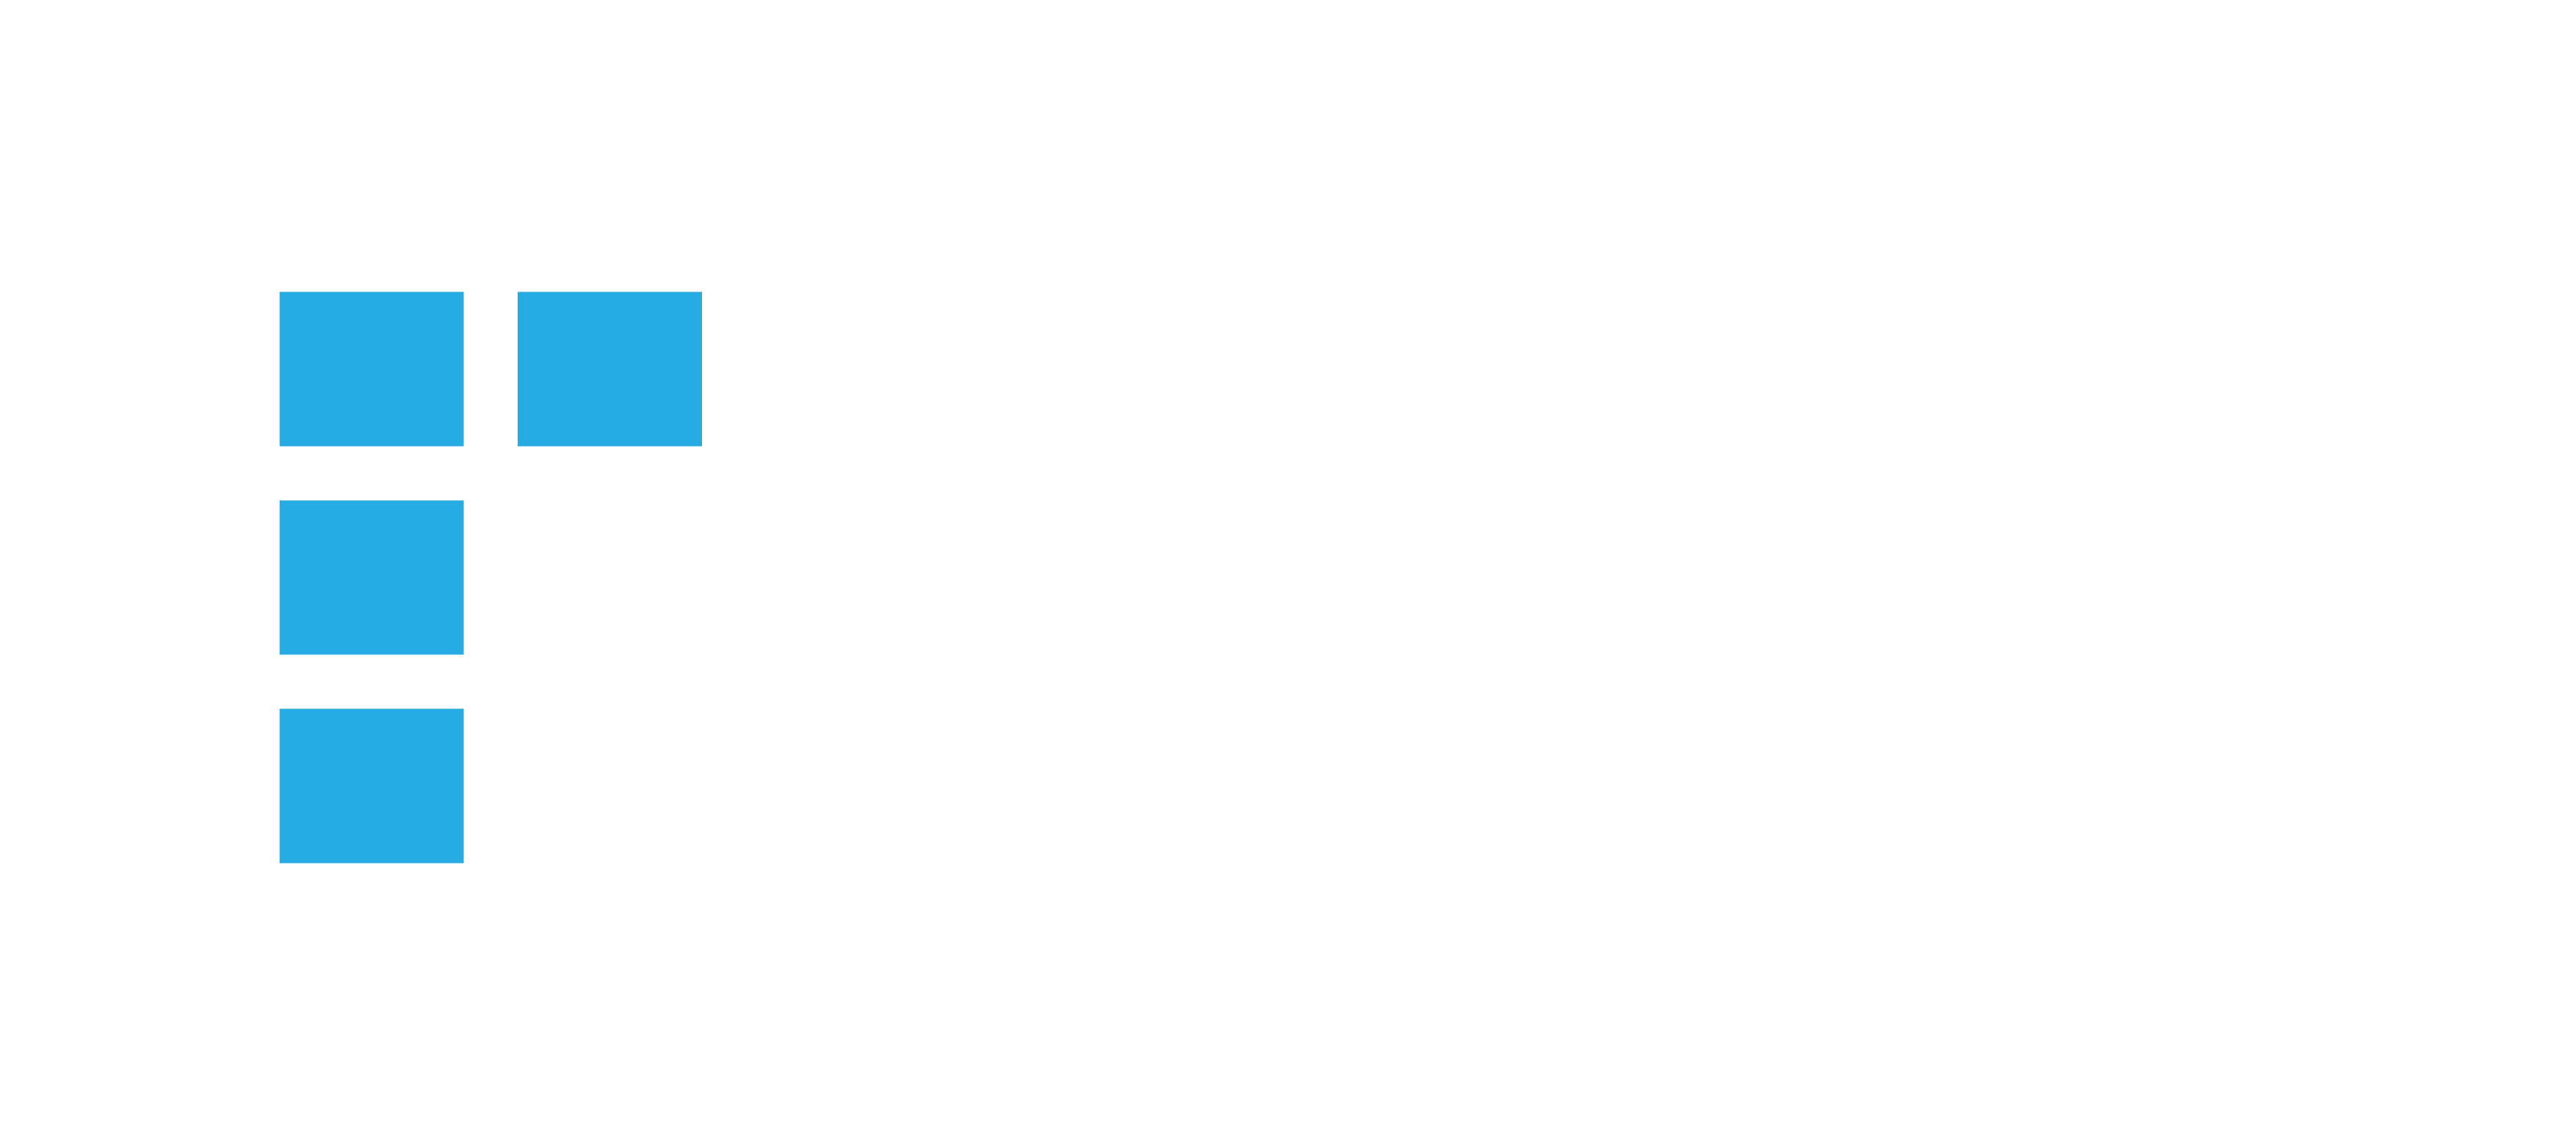 Forte Medical Solutions